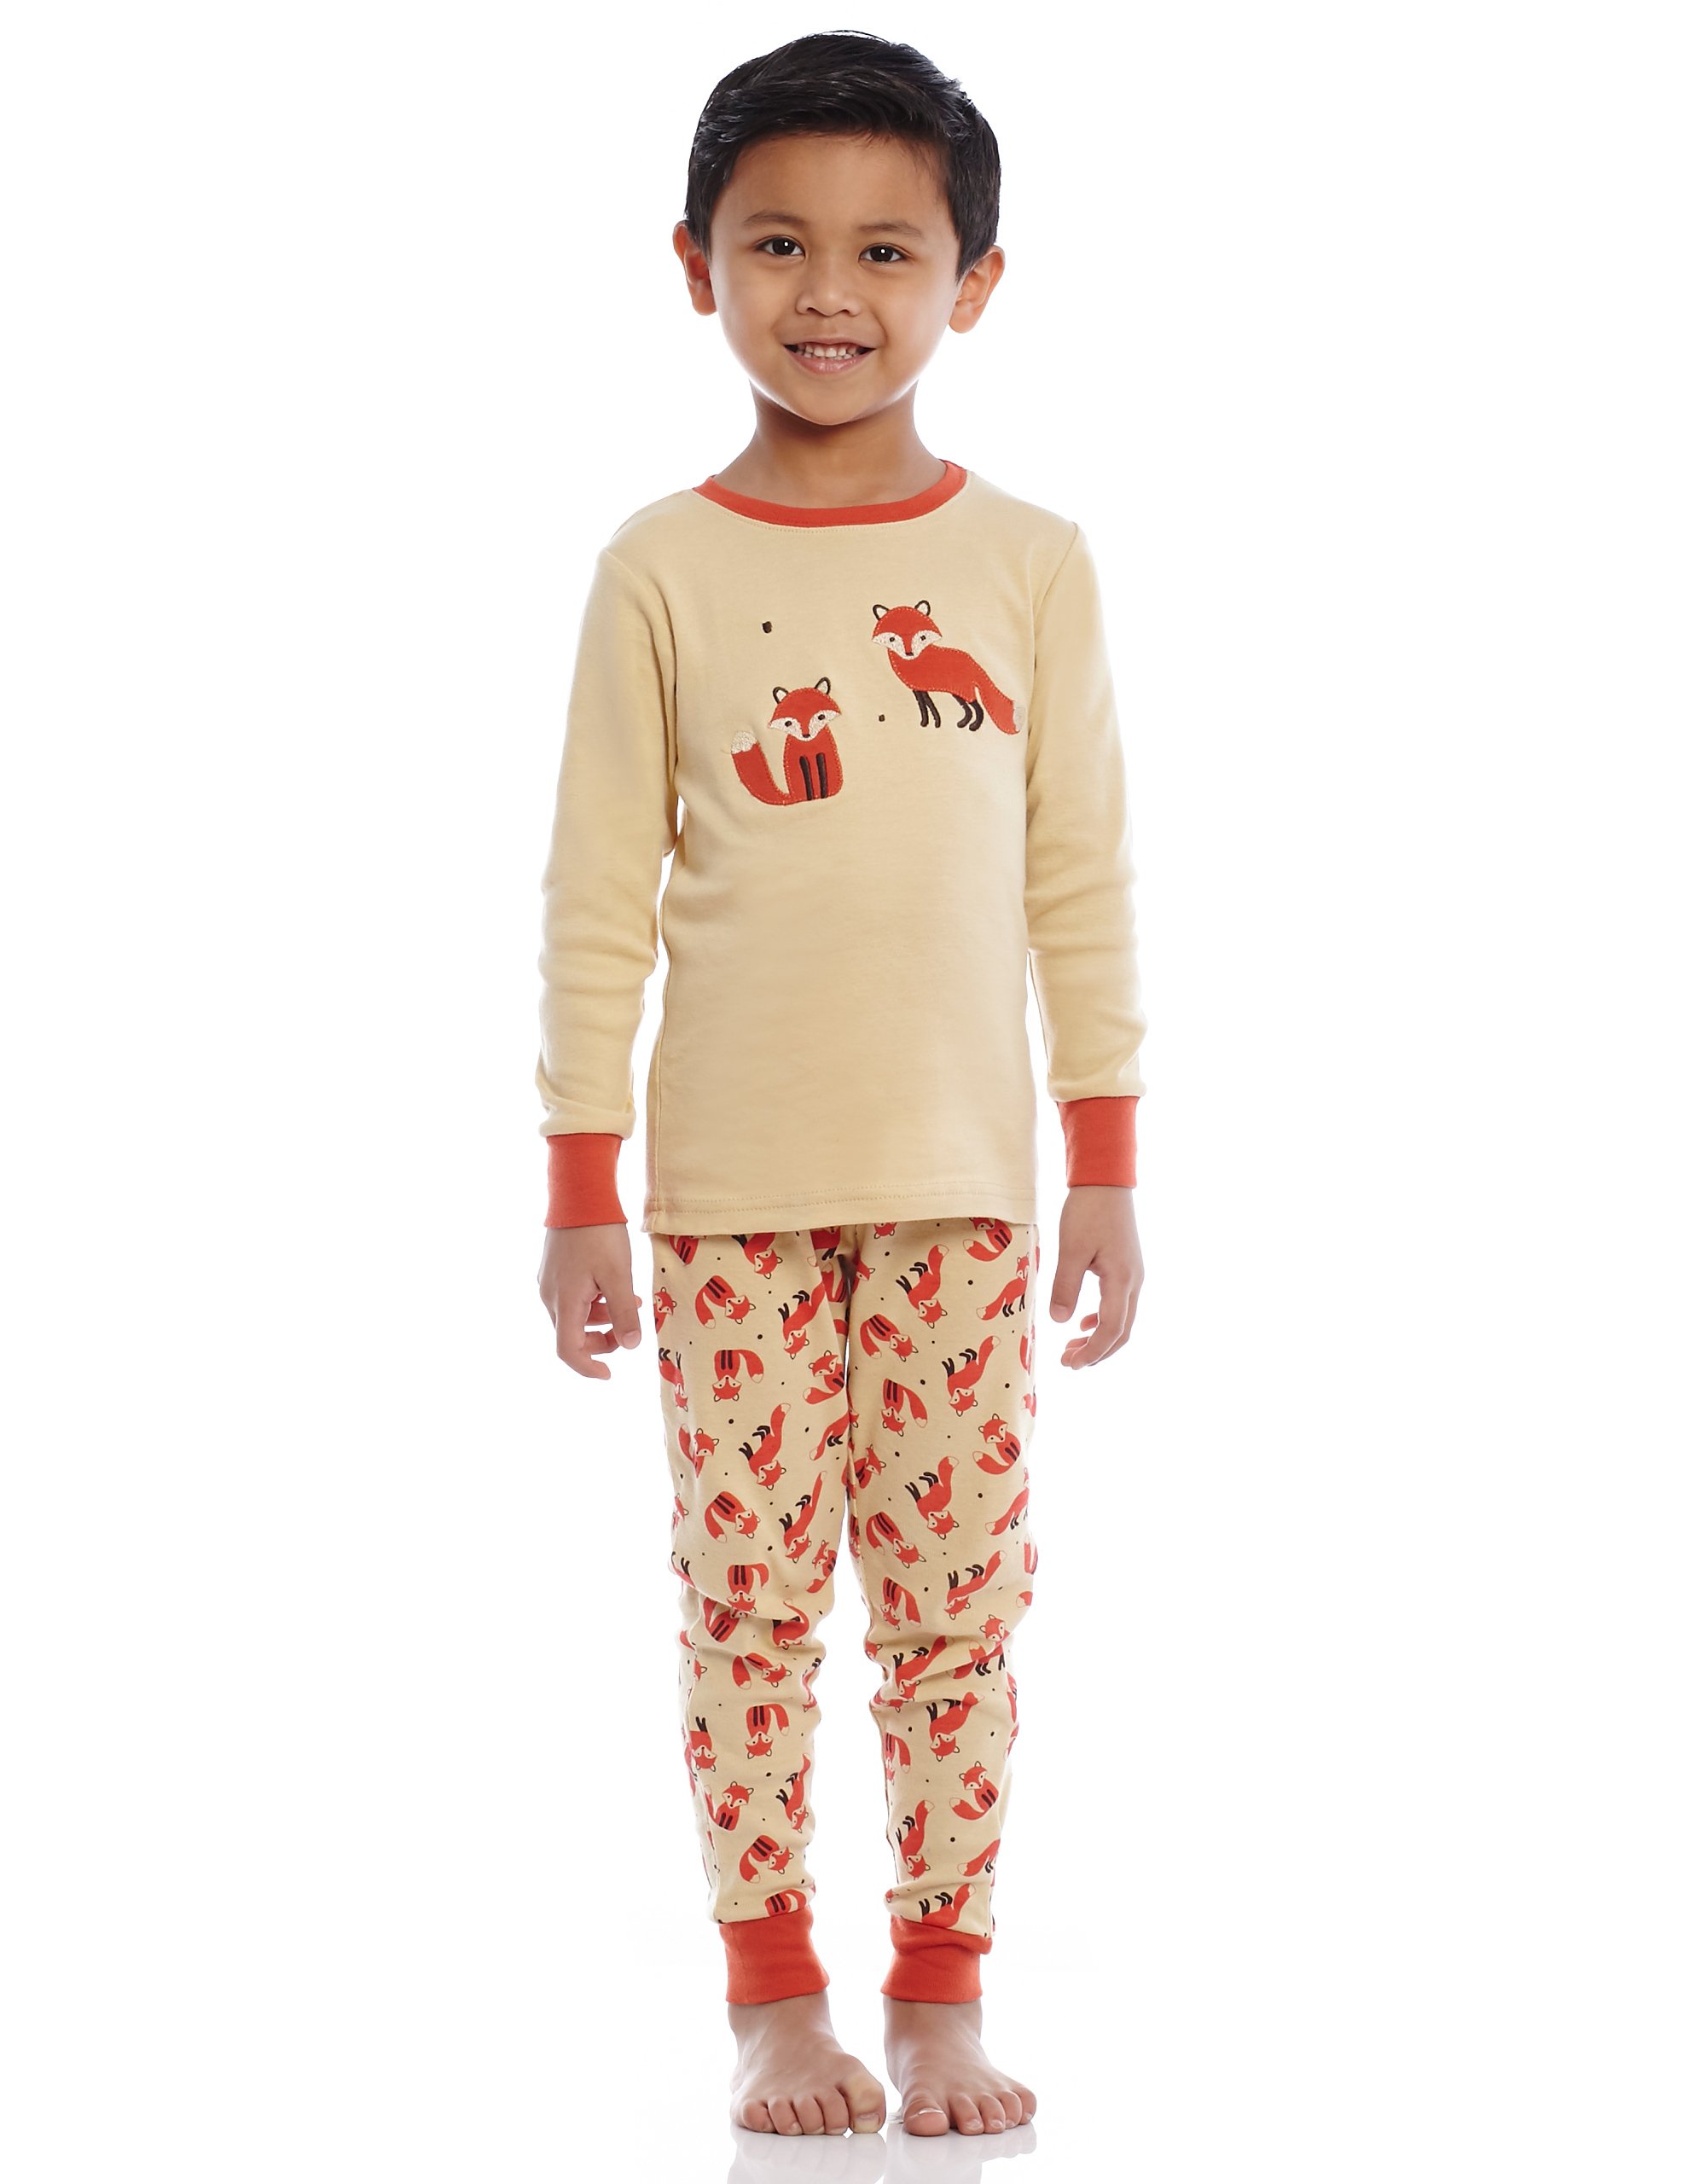 Leveret Kids Pajamas Boys Girls 2 Piece pjs set Animal Prints 100% Cotton Size